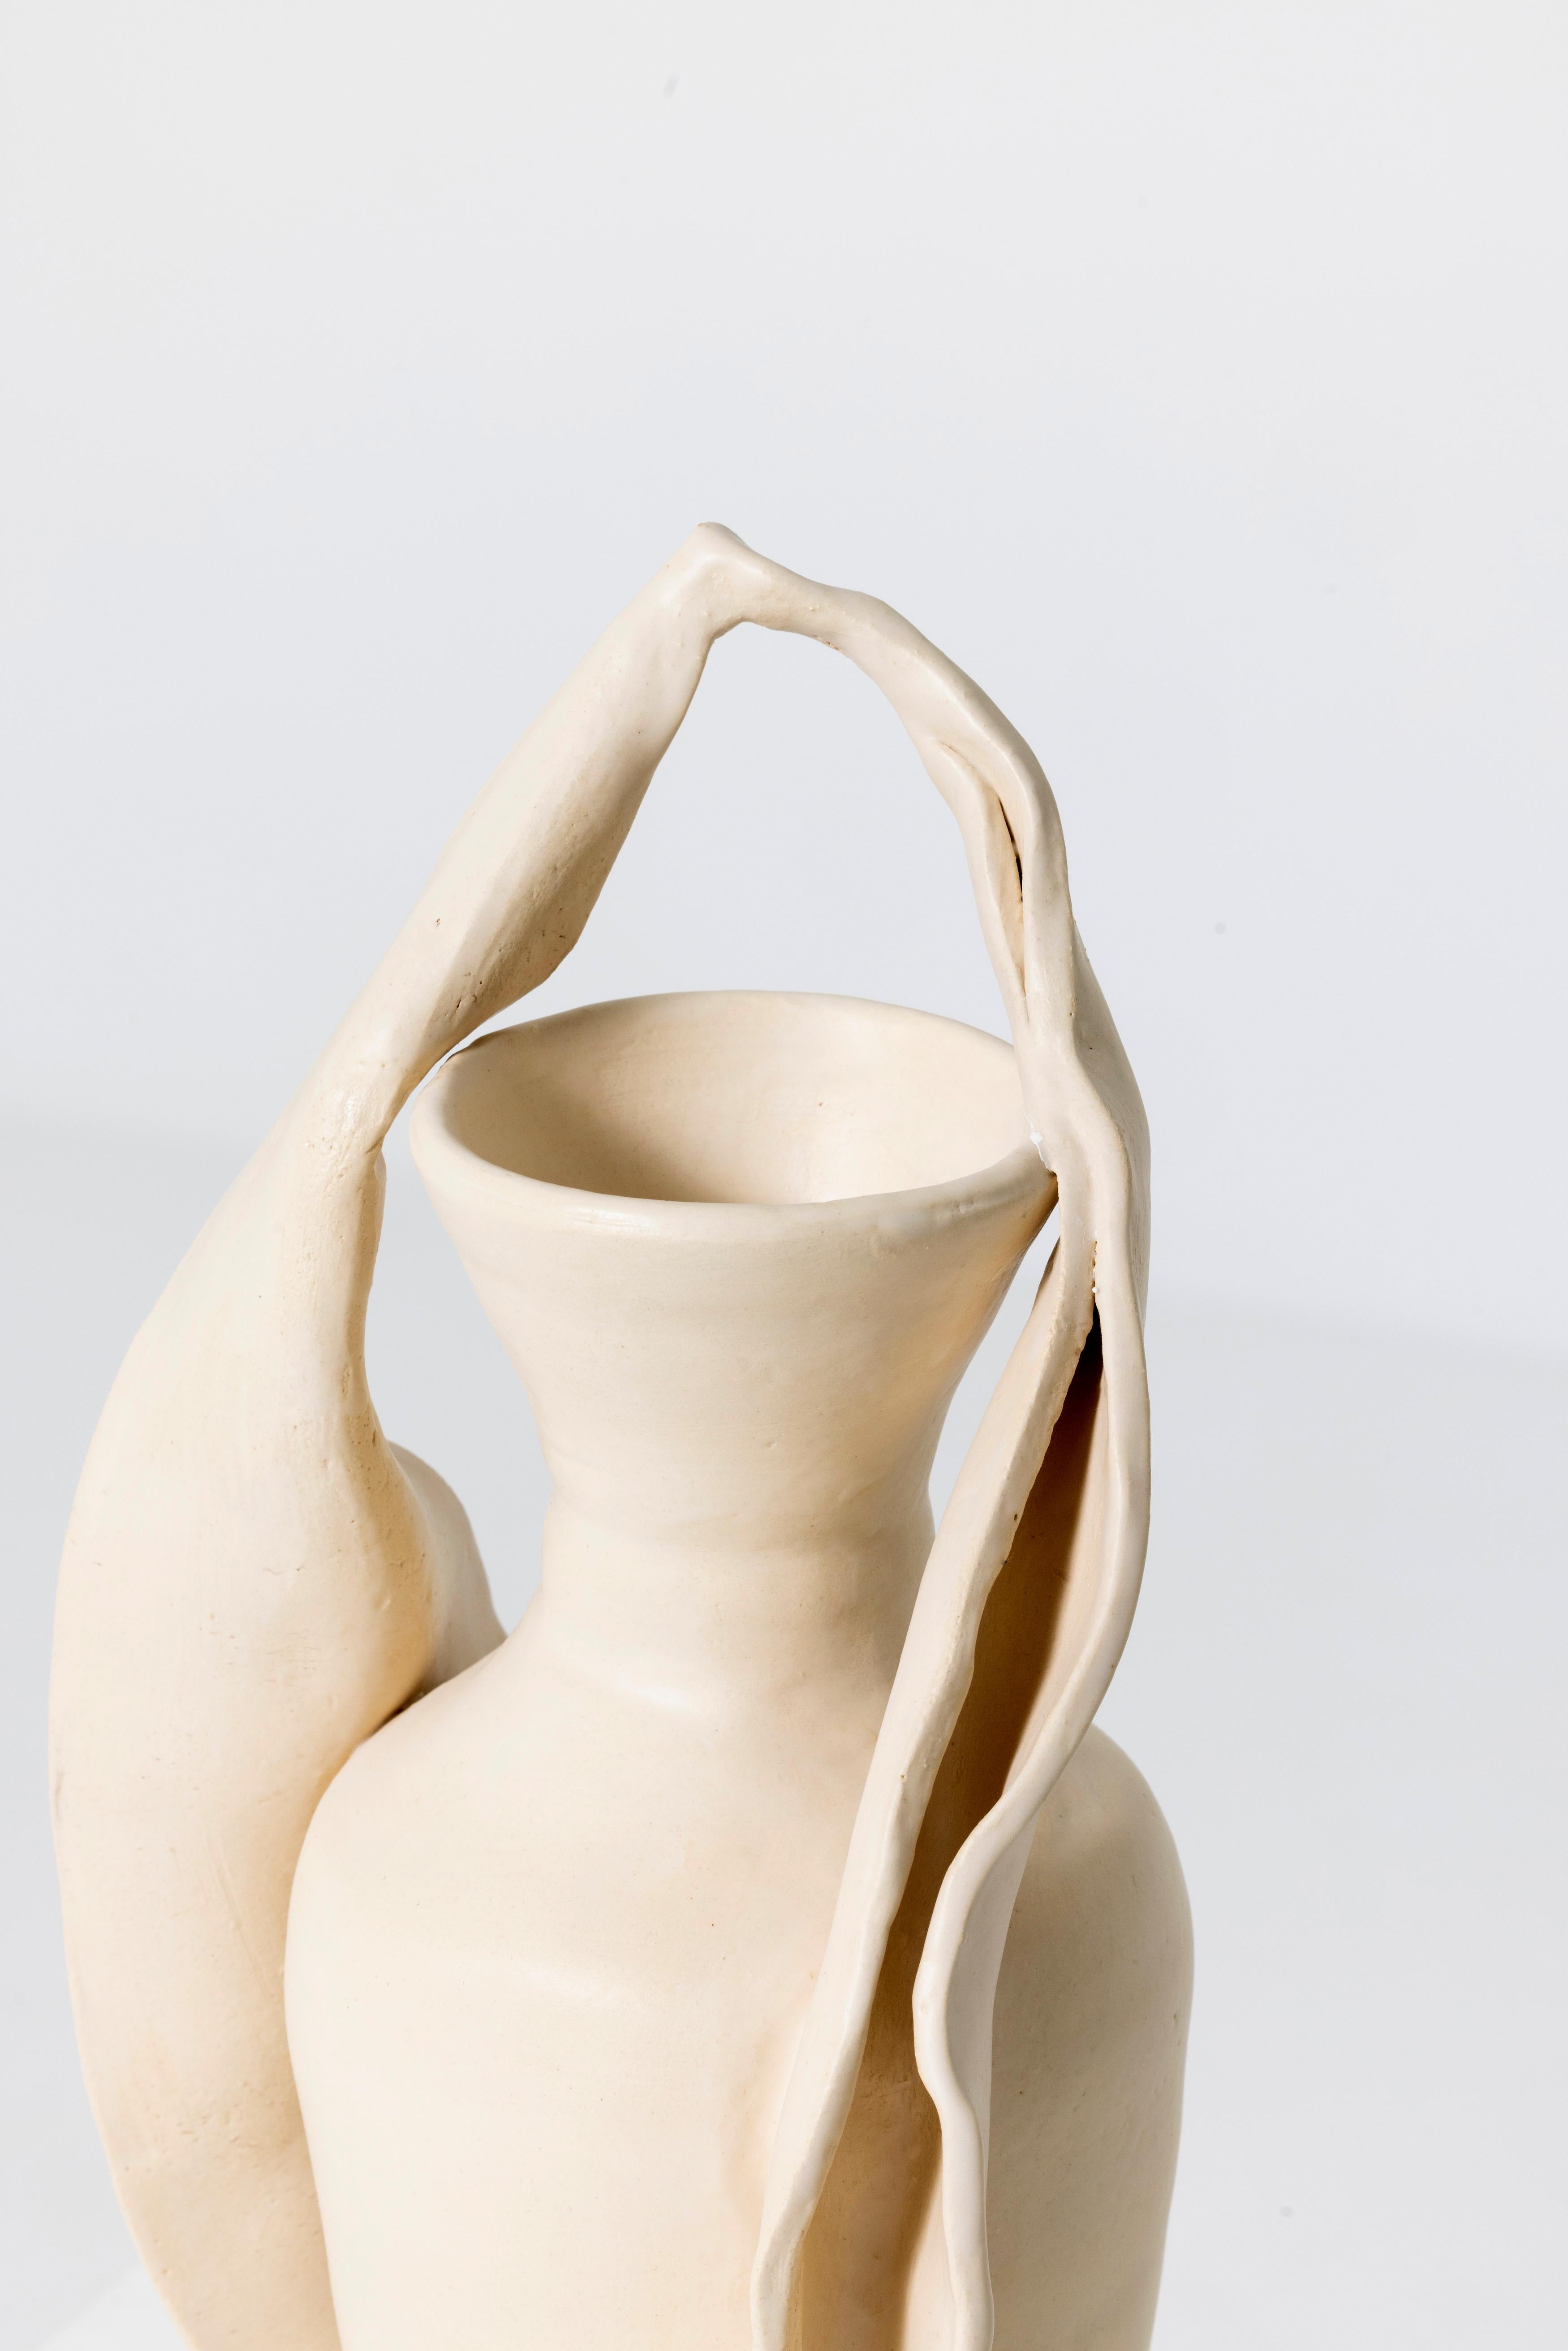 Glazed Contemporary Ceramic Vase, France For Sale